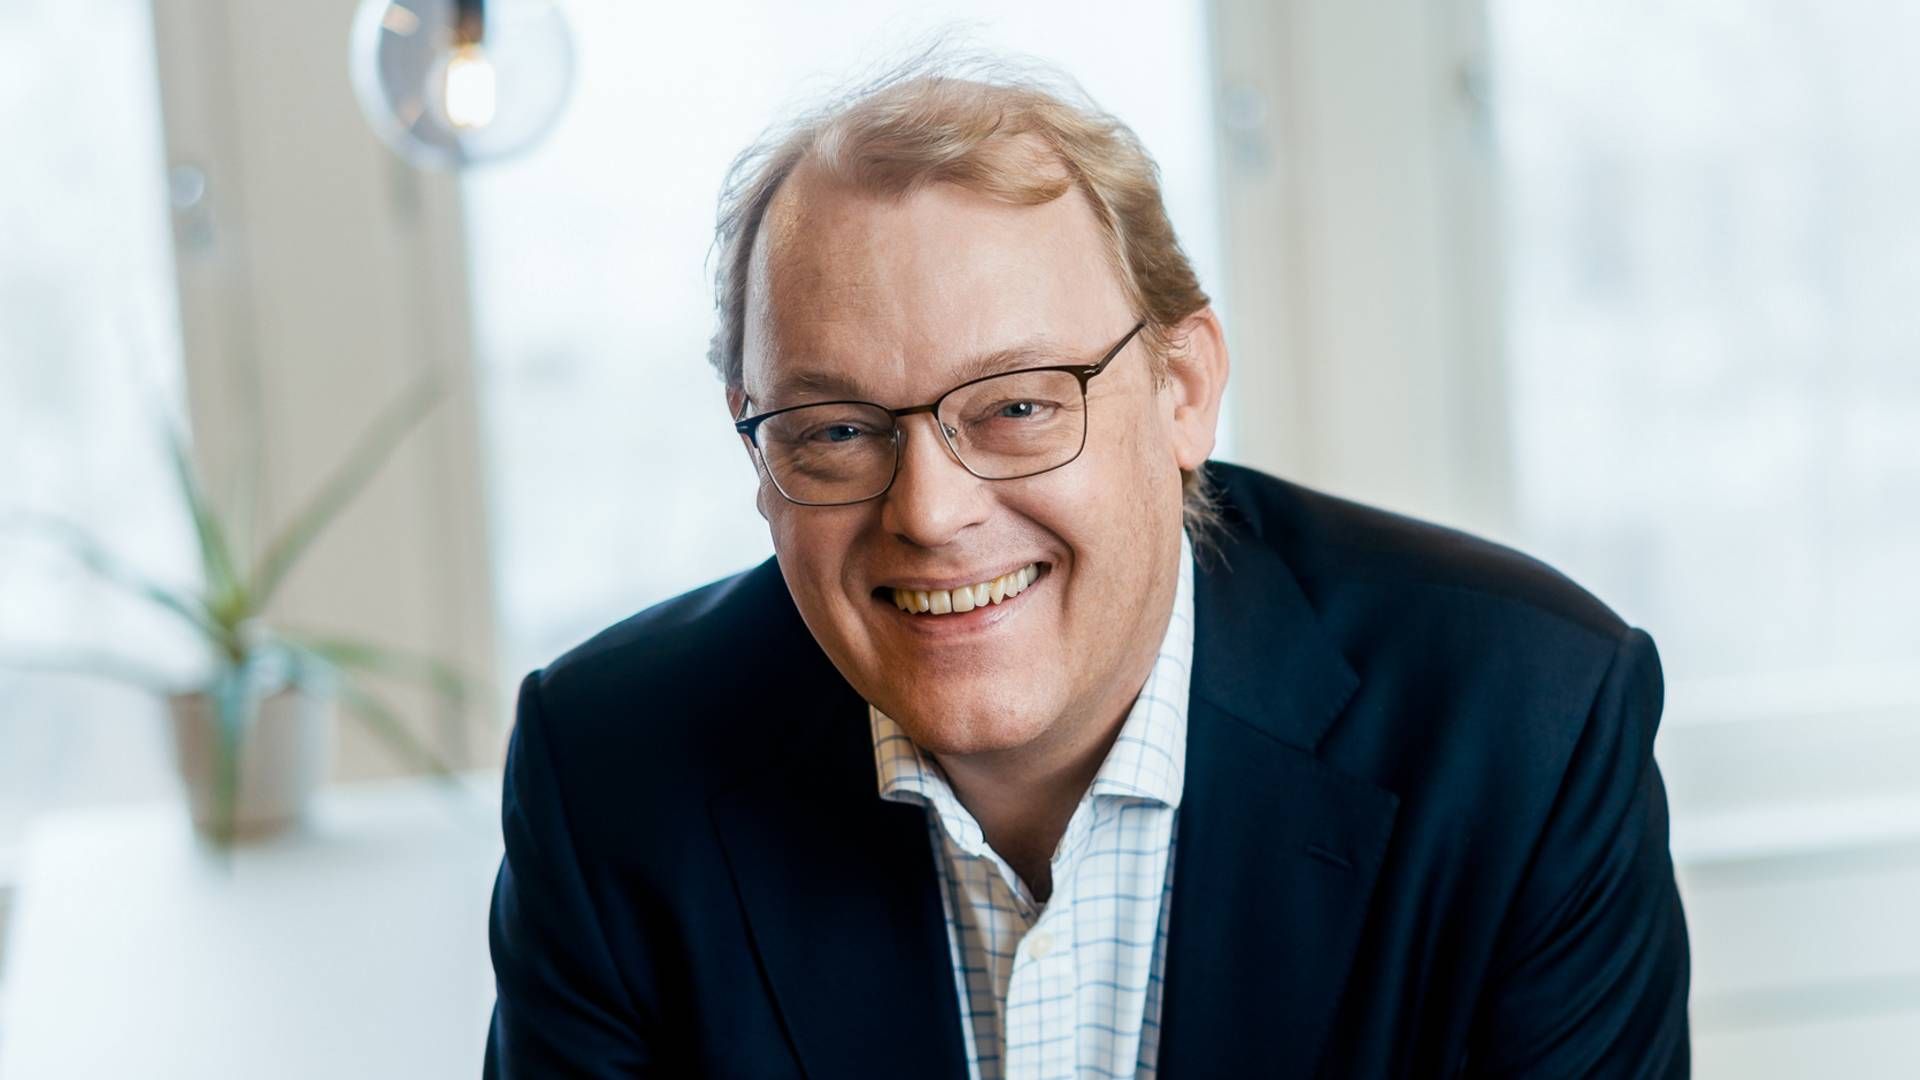 Steen Thygesen, CEO of Audientes | Photo: Audientes / PR